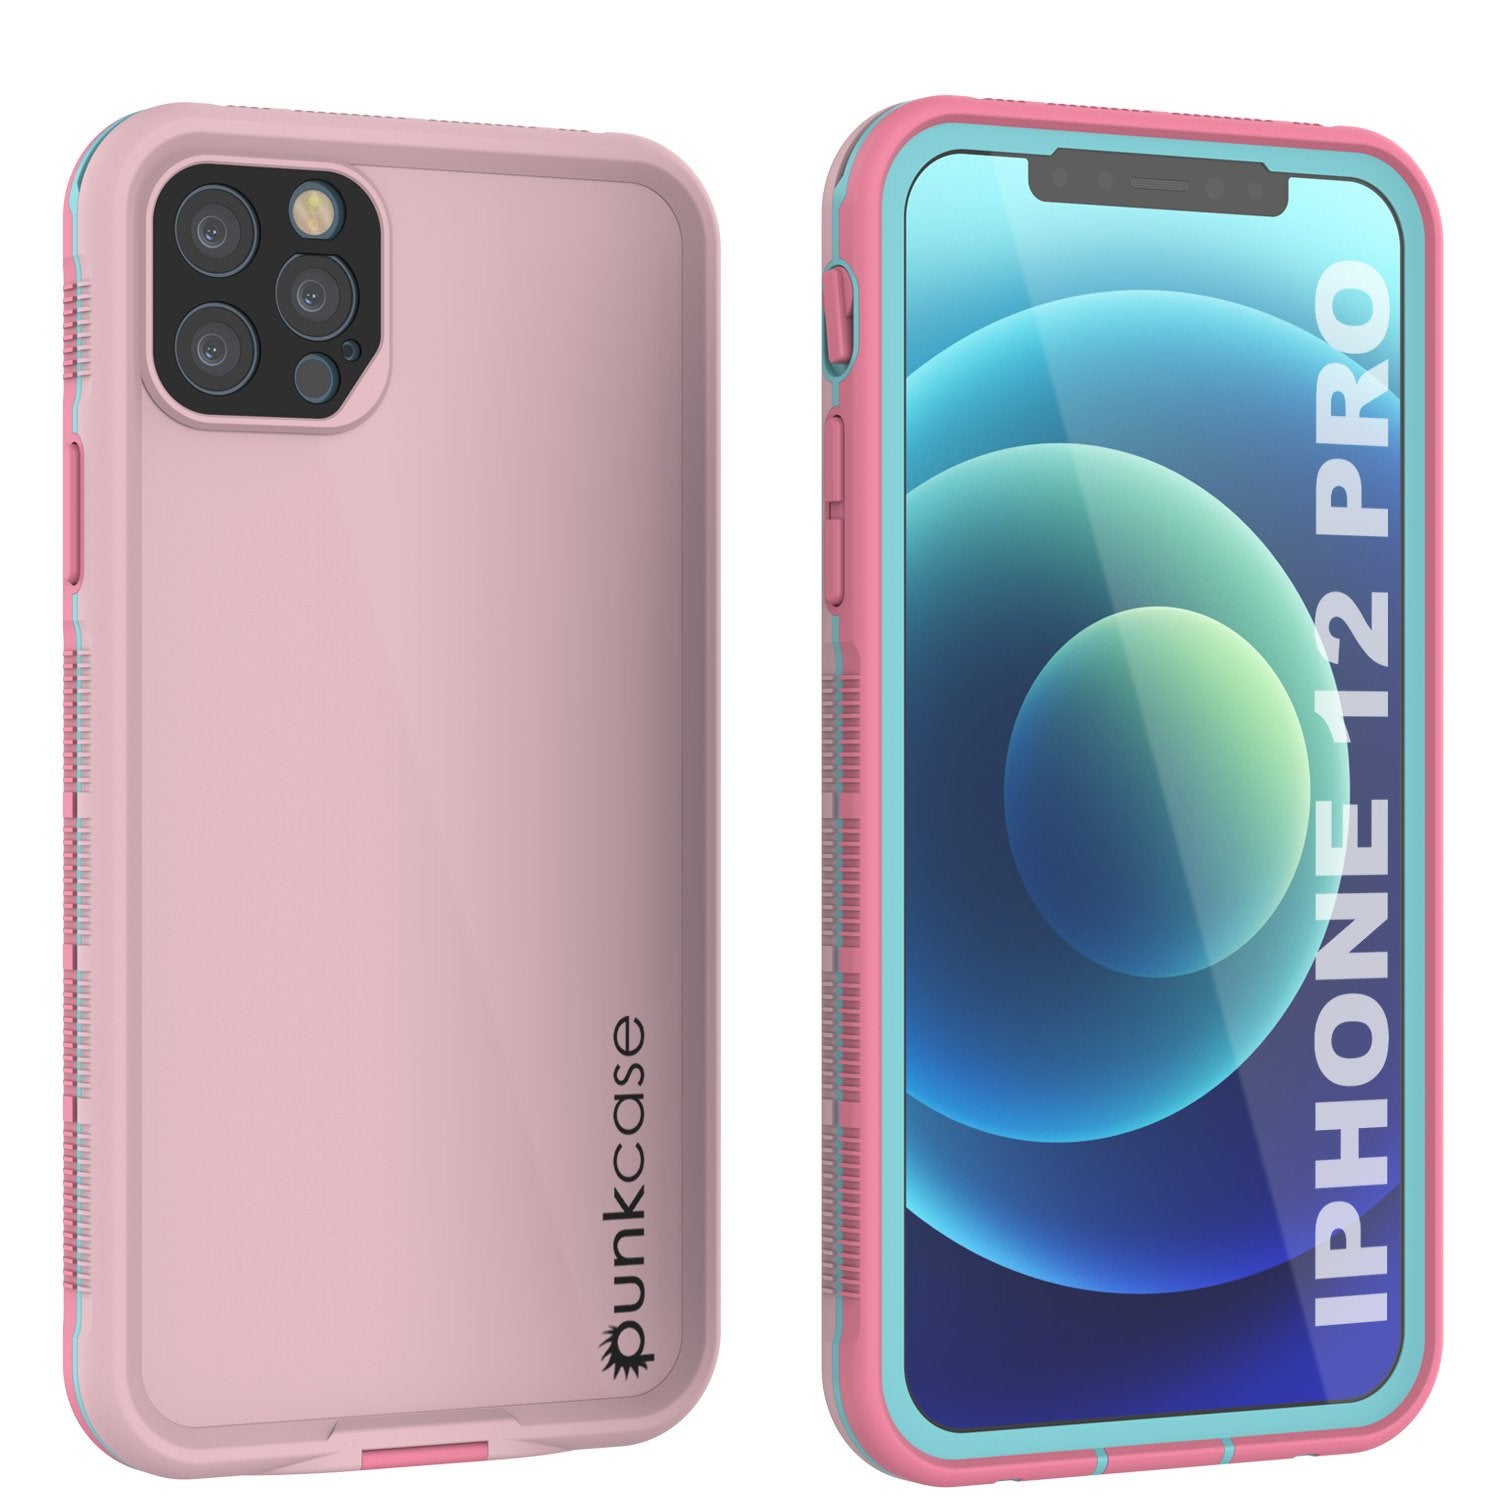 Punkcase iPhone 12 Pro Waterproof Case [Aqua Series] Armor Cover [Pink]